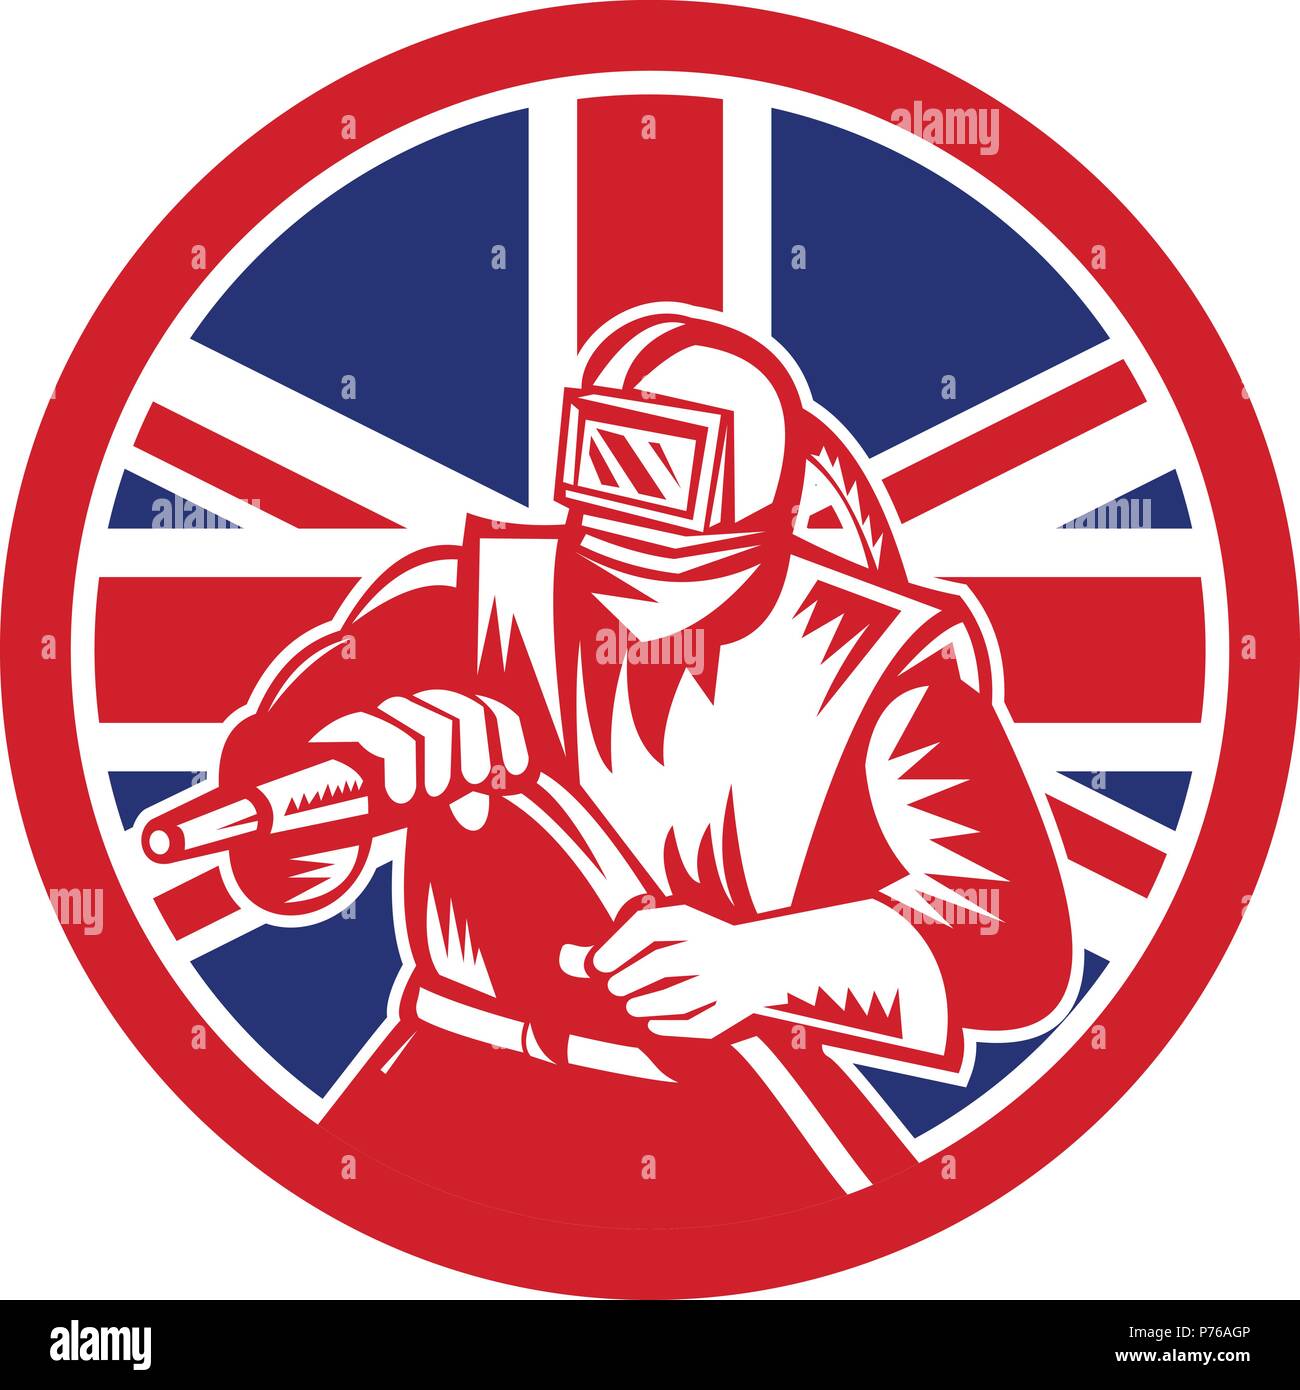 Icon retro style illustration of a British sandblaster, abrasive blasting or sandblasting,  with United Kingdom UK, Great Britain Union Jack flag set  Stock Vector